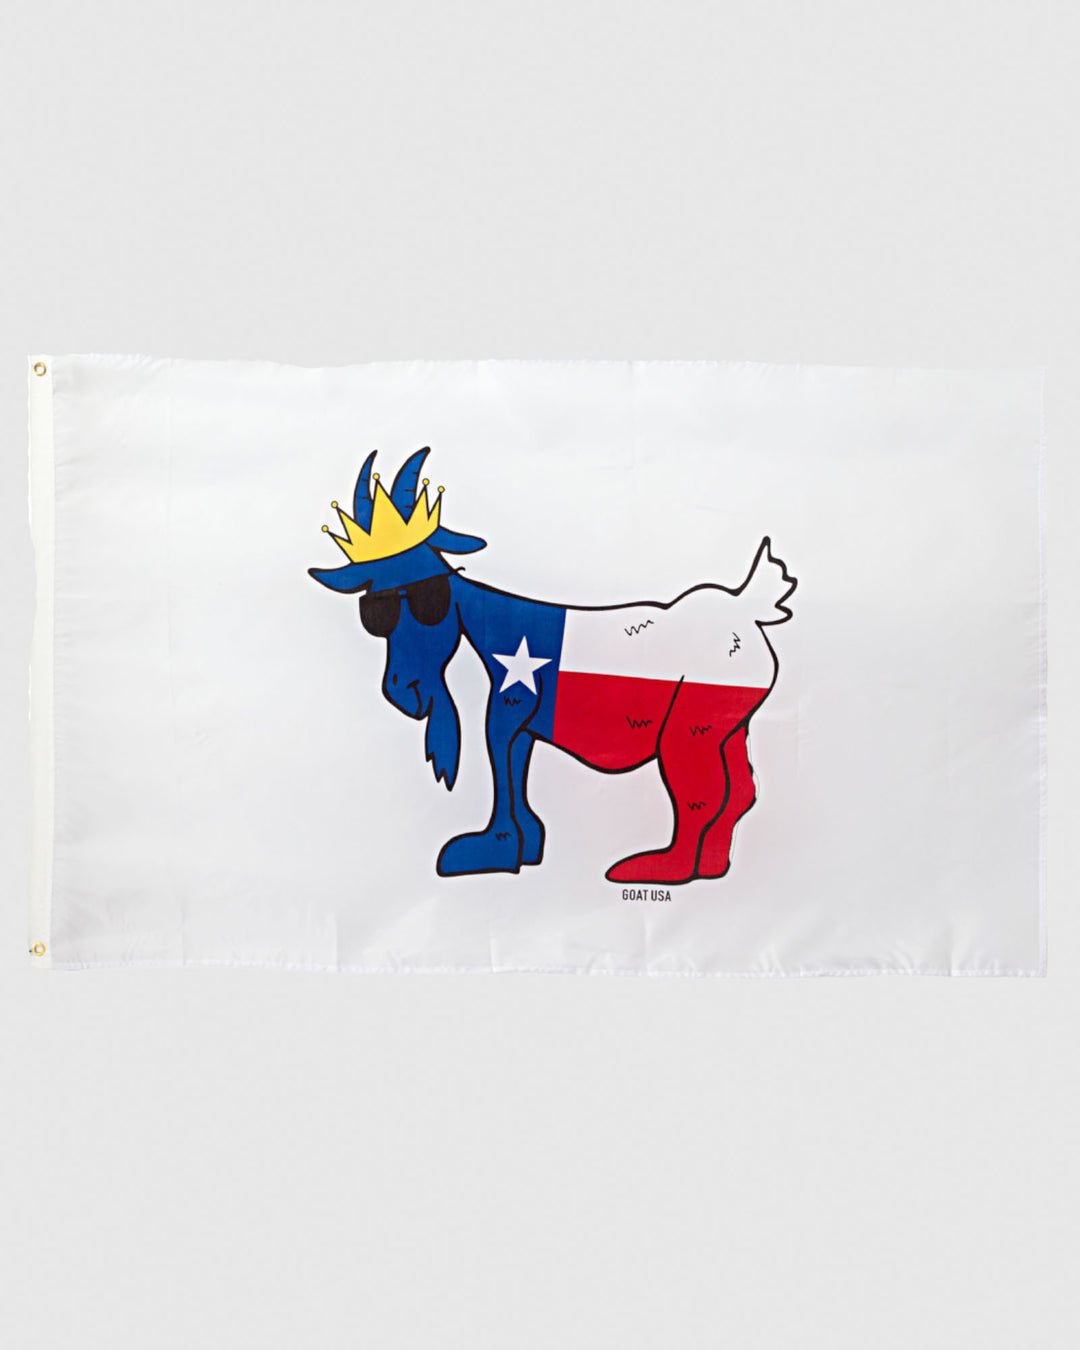 Freedom Flag – GOAT USA